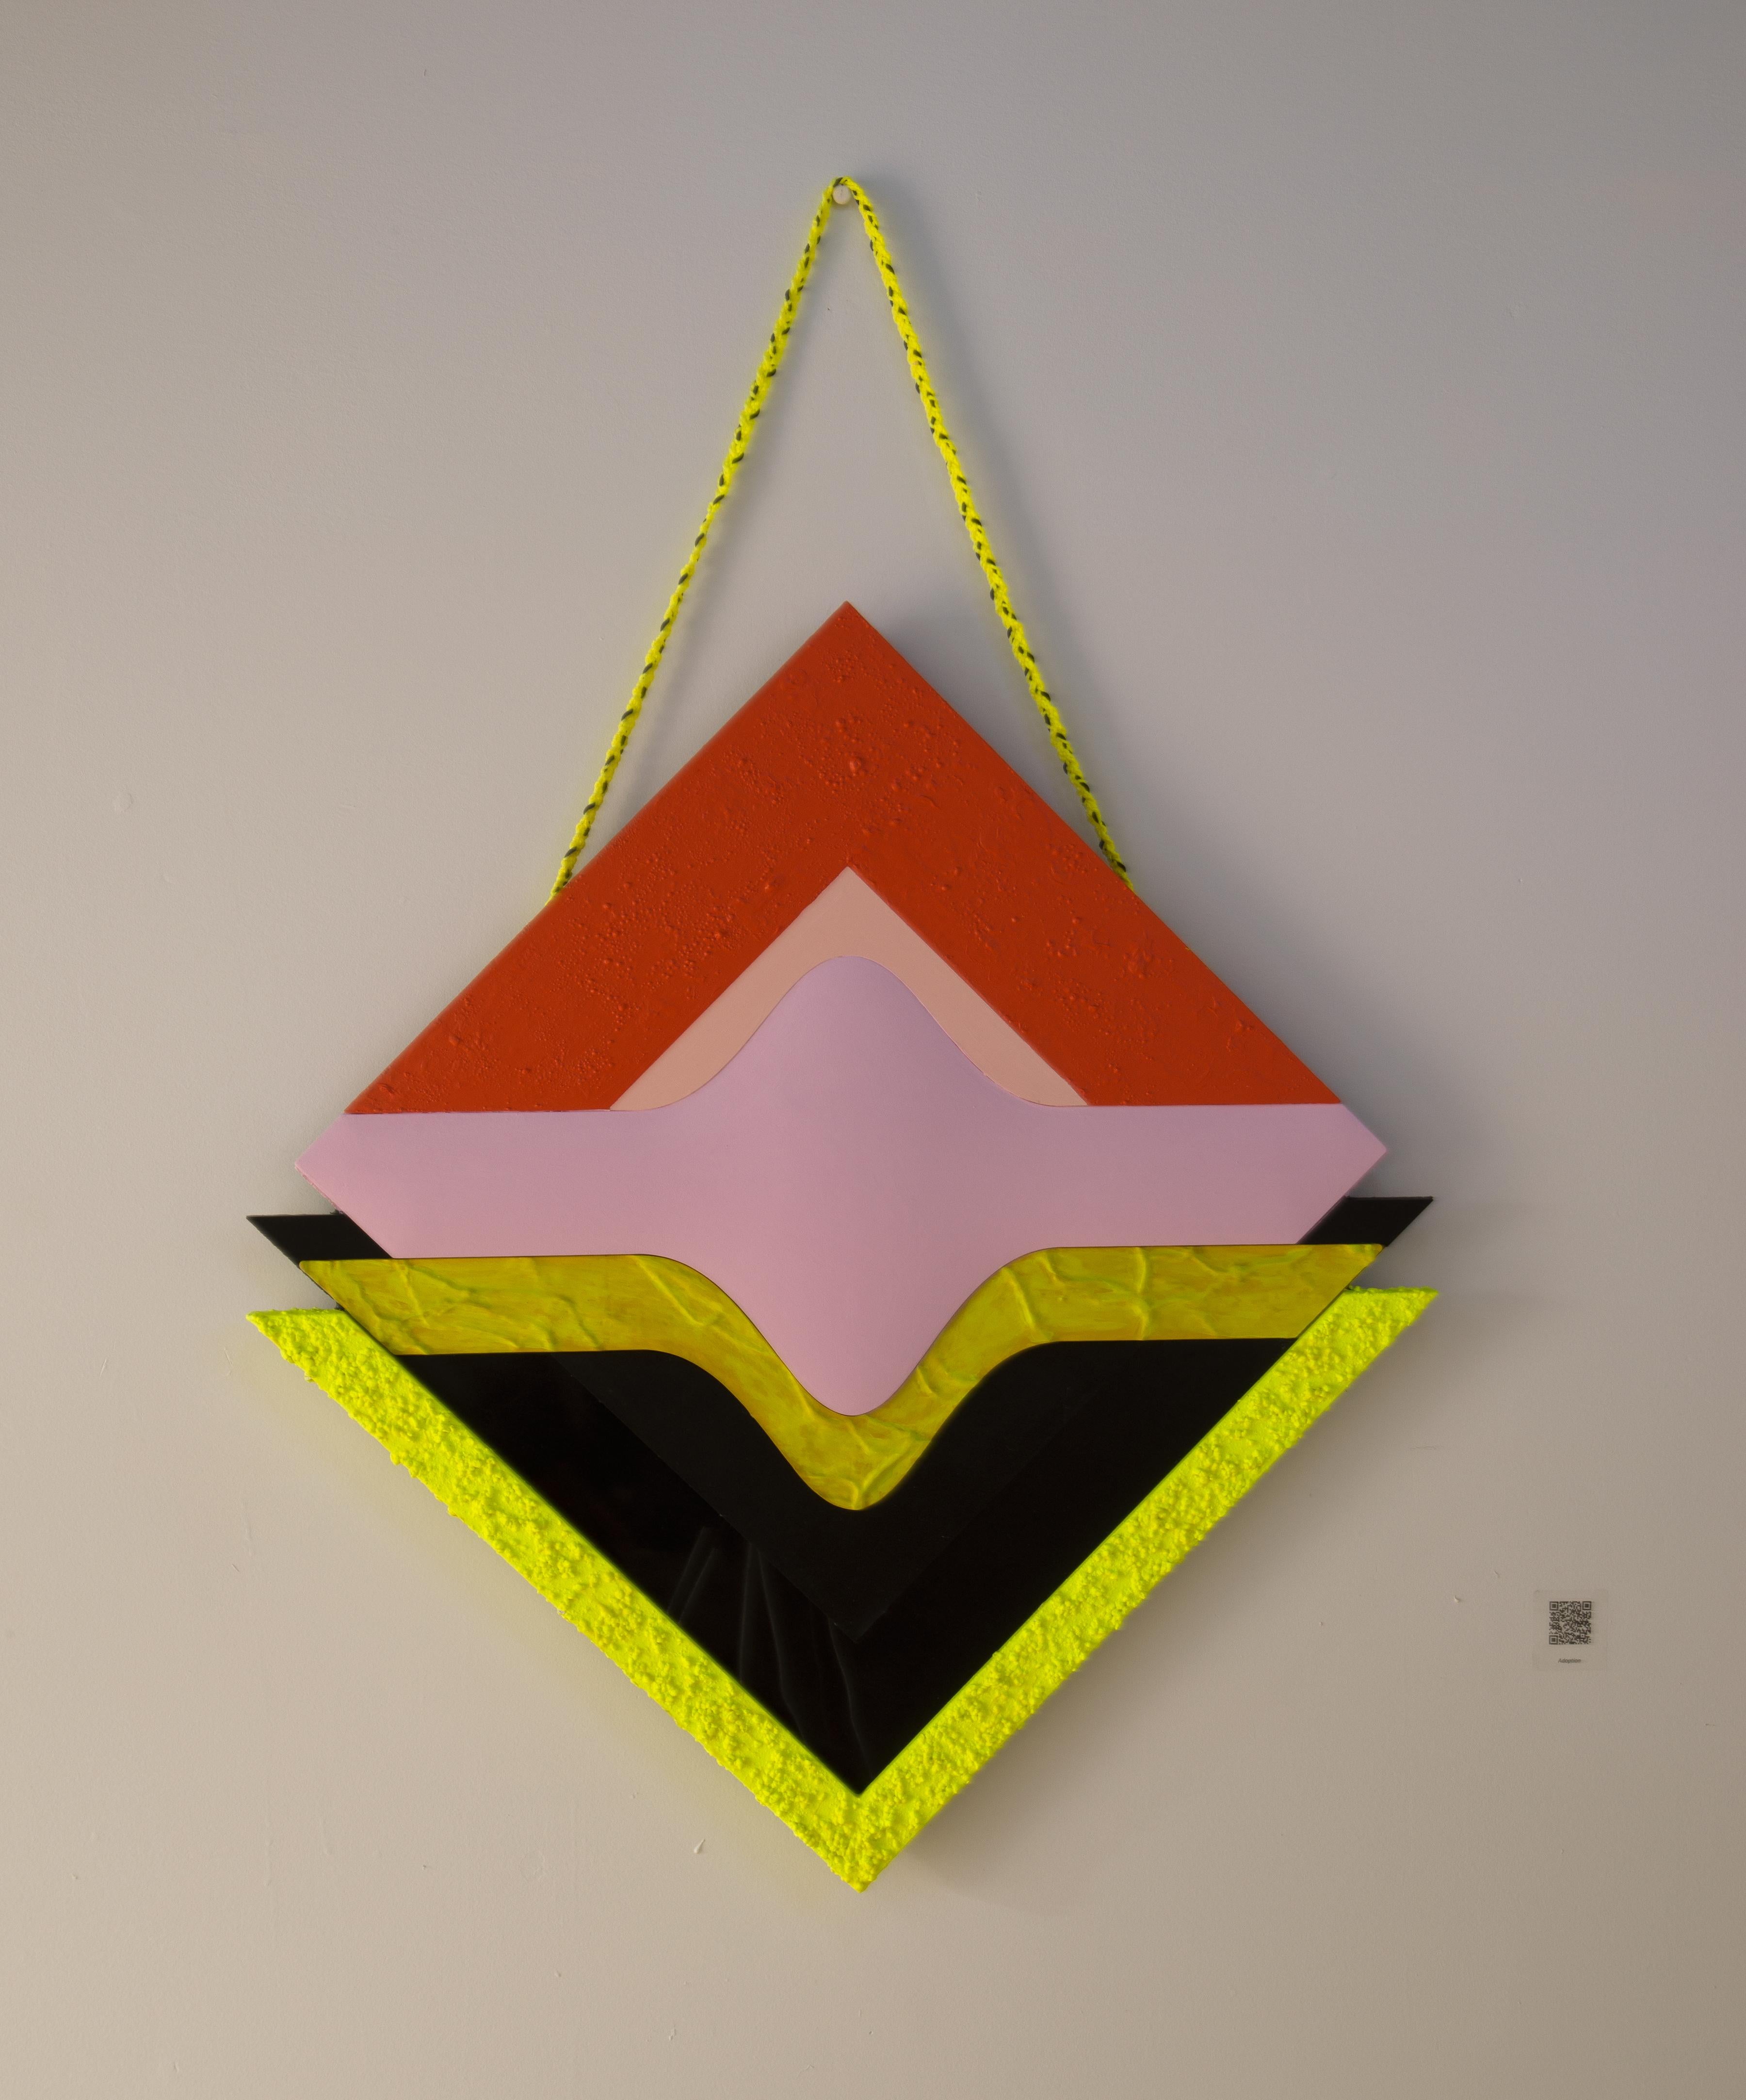 Joshua Edward Bennett Abstract Painting - ADOPTION - Wall Hanging Sculpture, Neon Yellow, Black, Orange, Pink